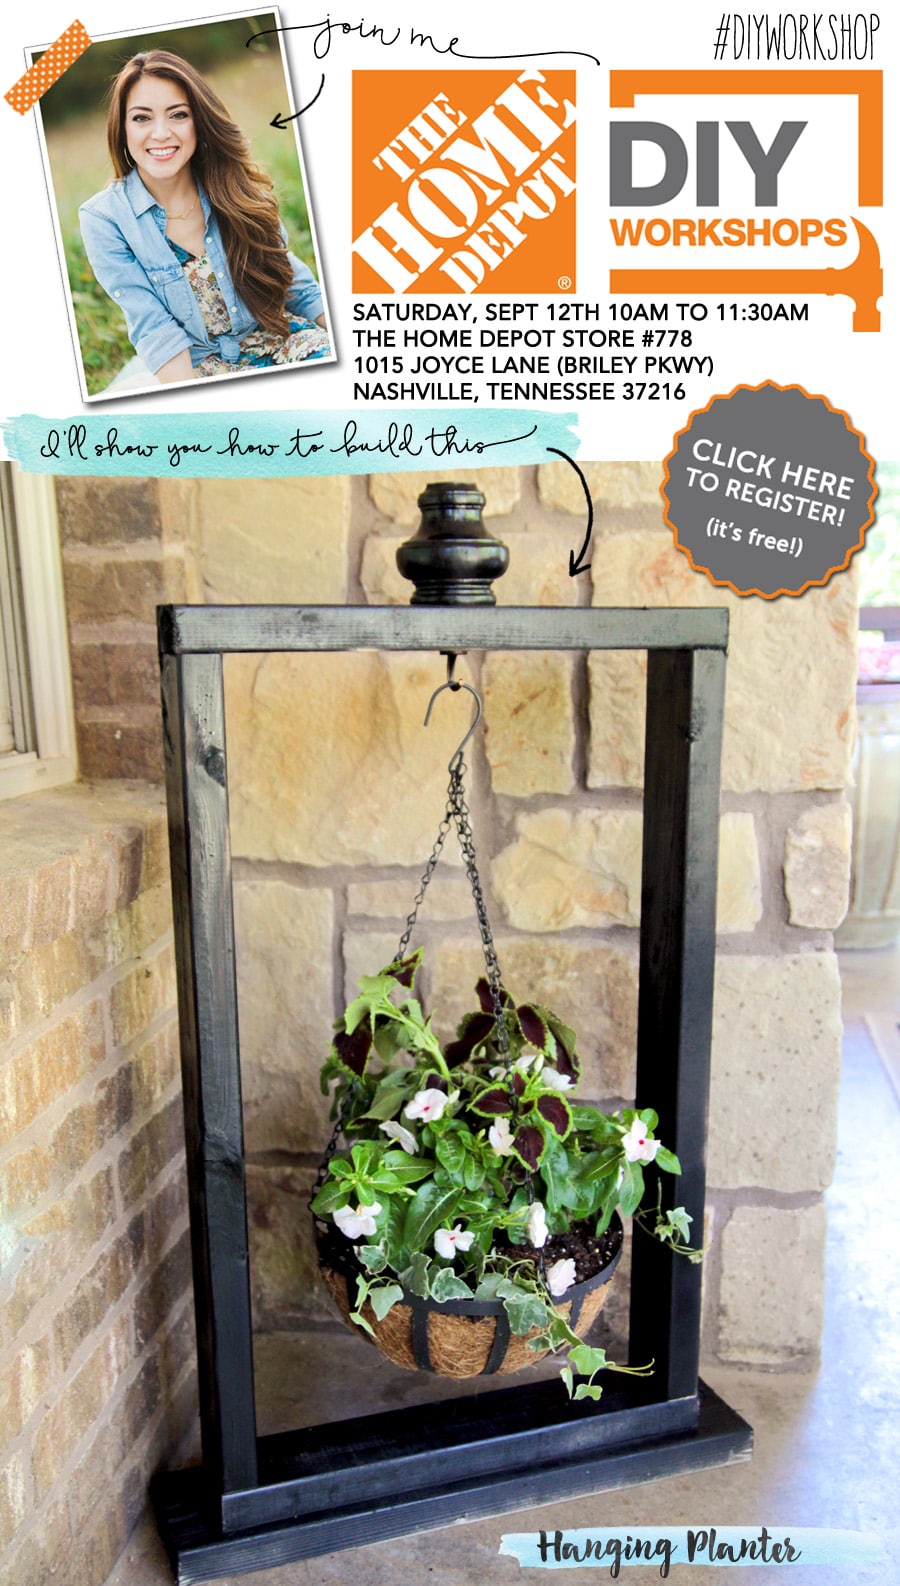 Build a hanging planter at the Home Depot DIY Workshop